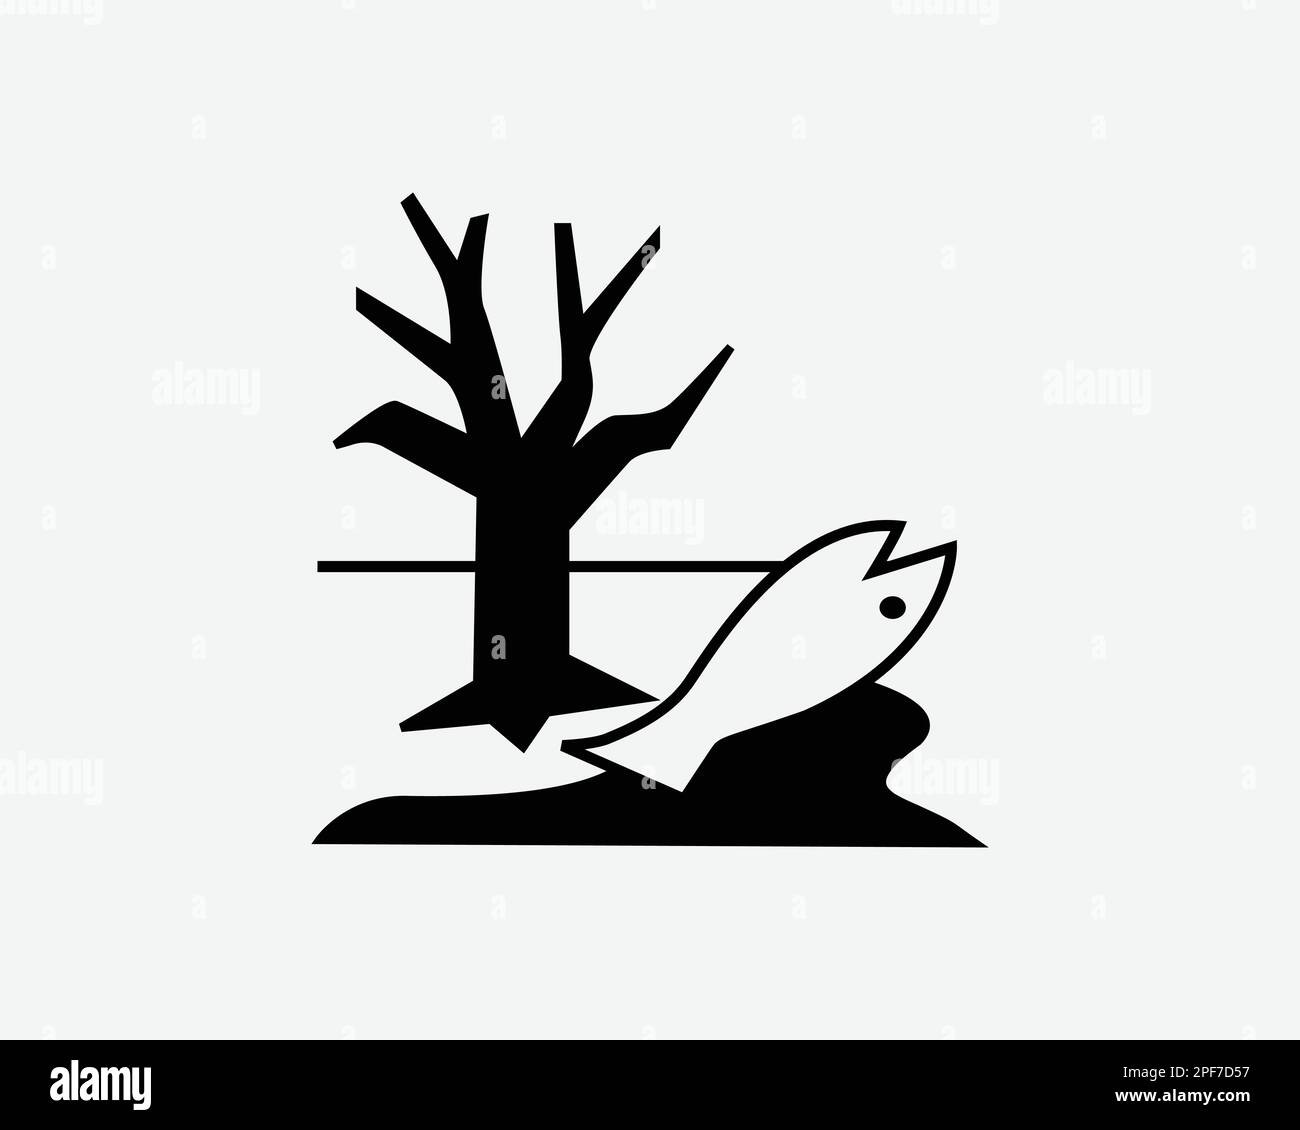 Pollution Icon Environmental Pollute Disaster Destruction Death Vector Black White Silhouette Symbol Sign Graphic Clipart Artwork Illustration Pictogr Stock Vector